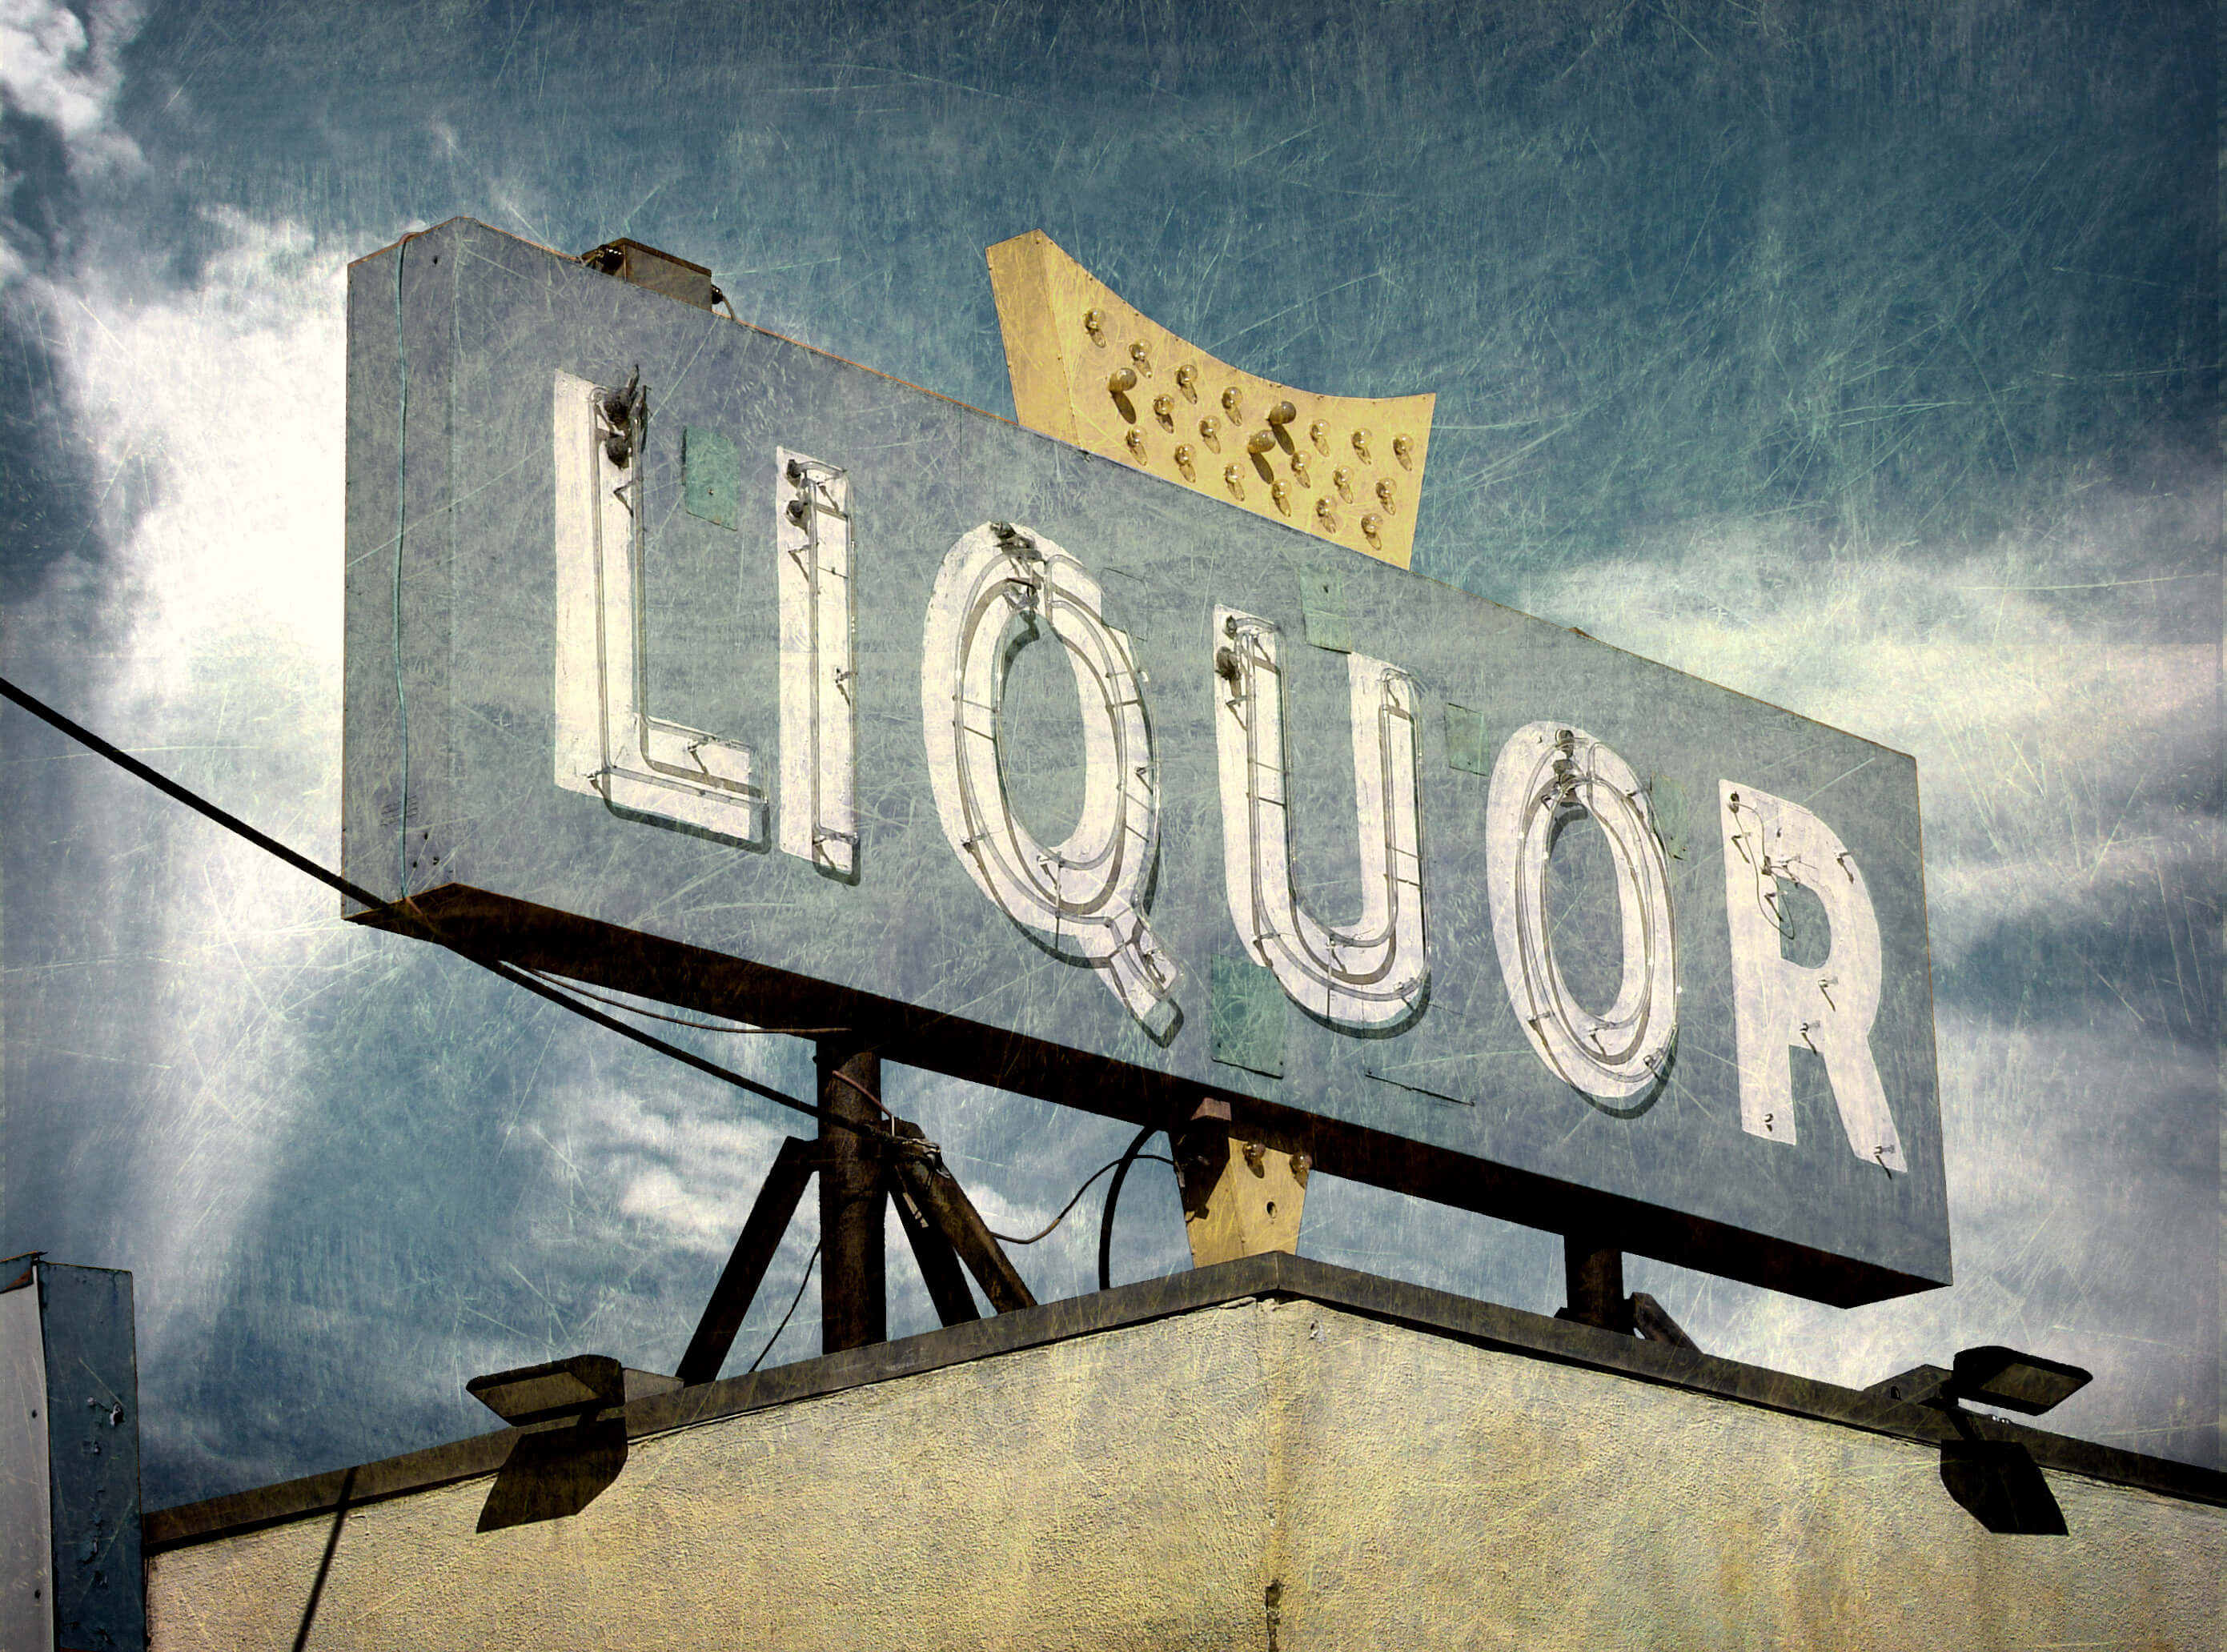 Retro liquor store sign